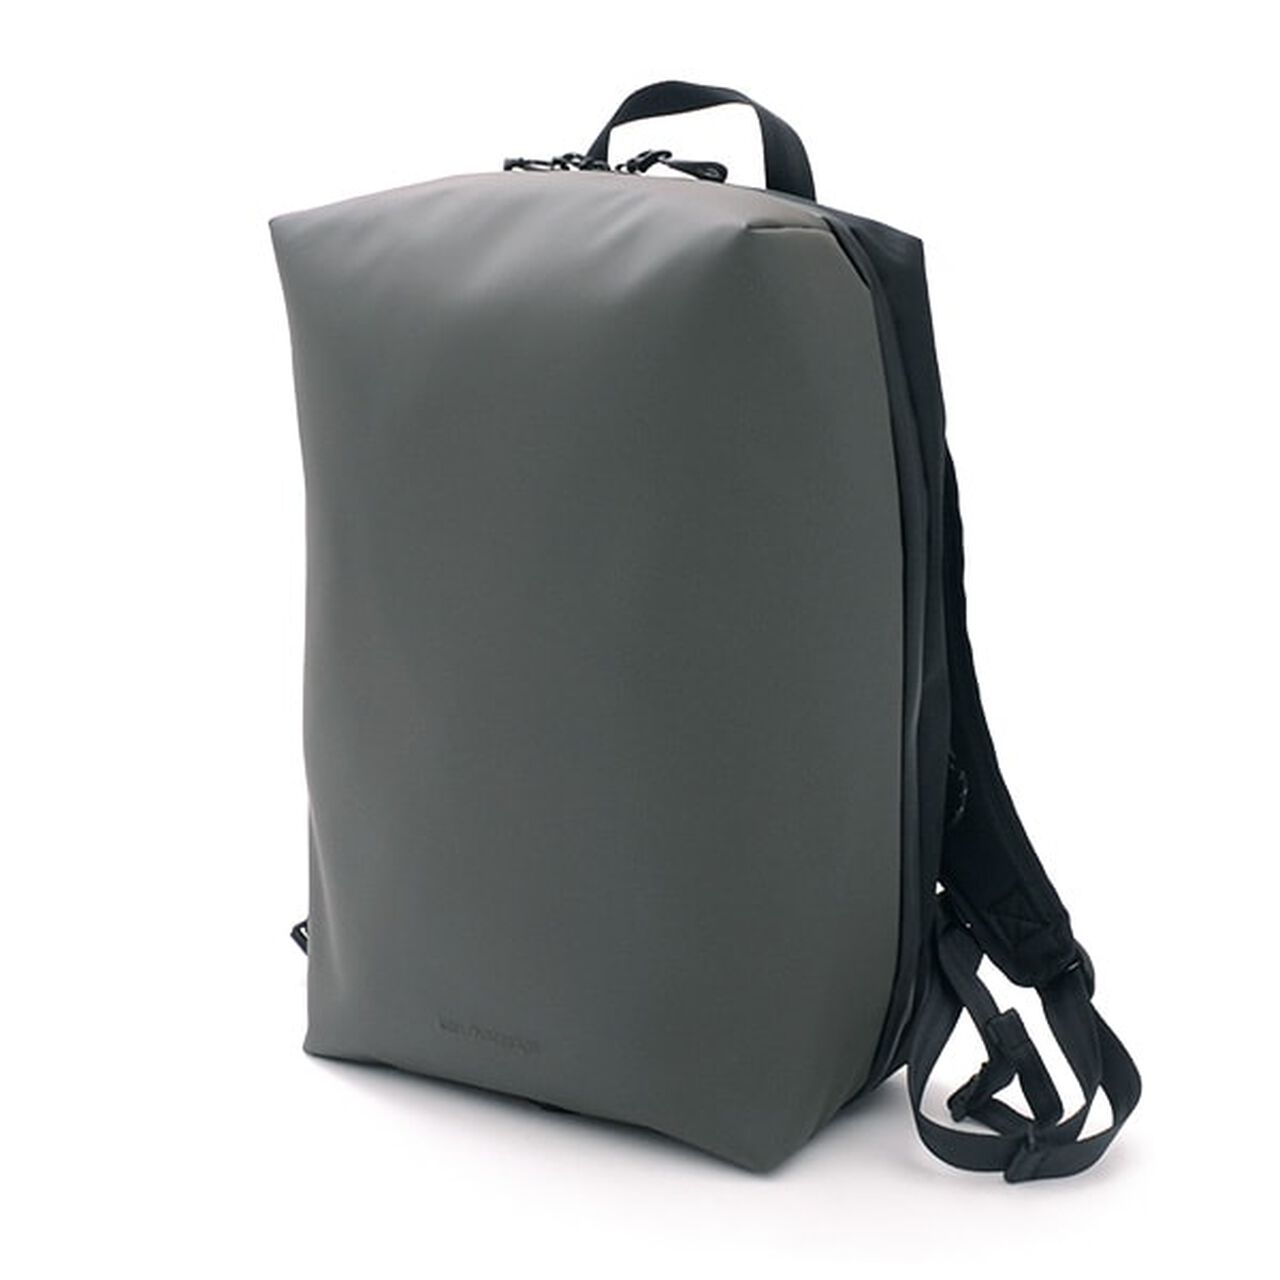 Urban Explorer 20 Backpack,Army, large image number 0